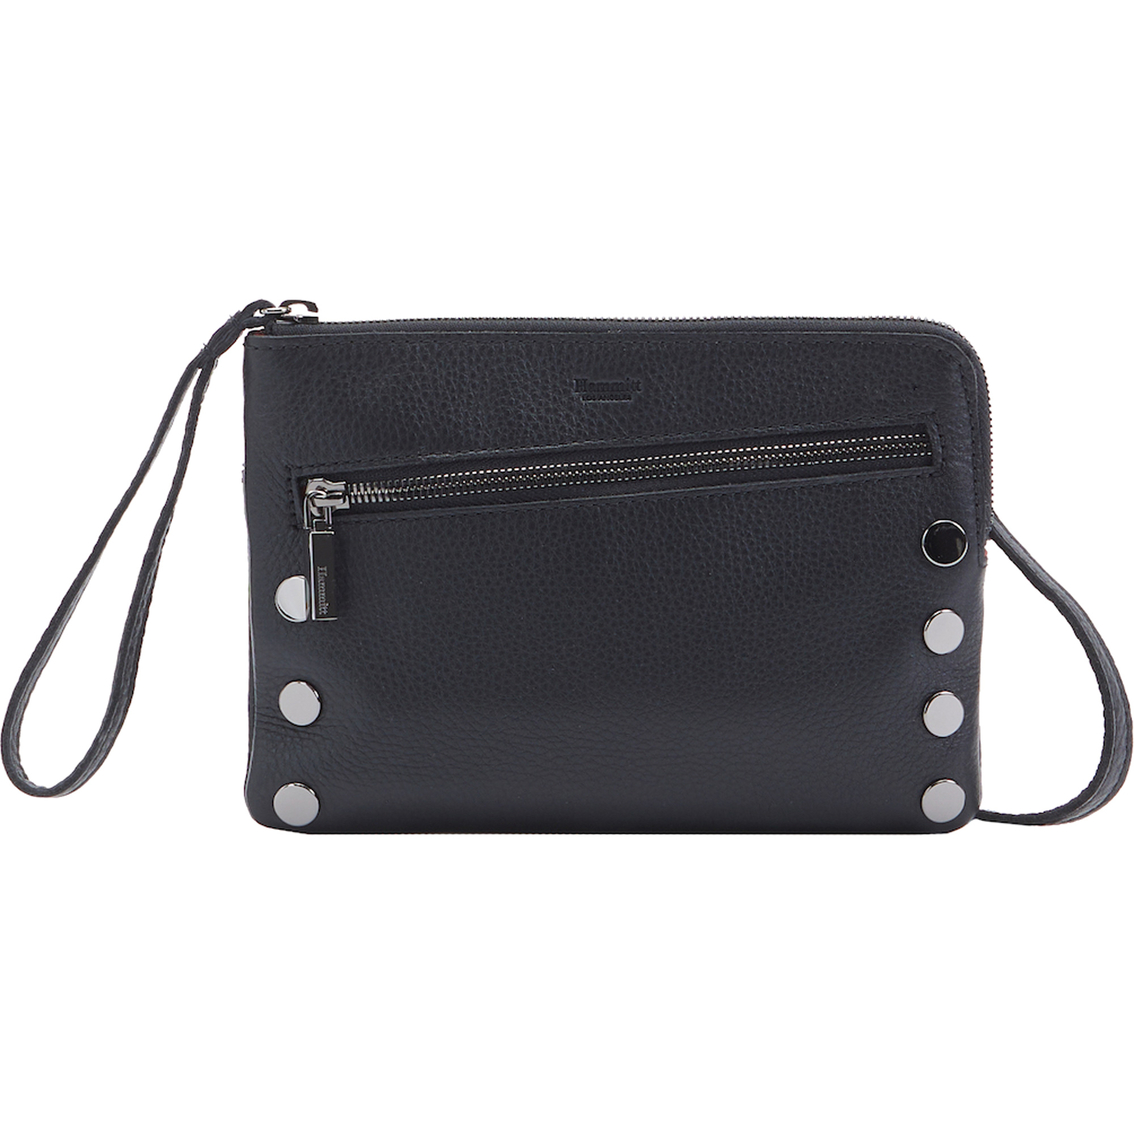 Hammitt Nash Small Handbag | Wristlets, Clutches | Clothing ...